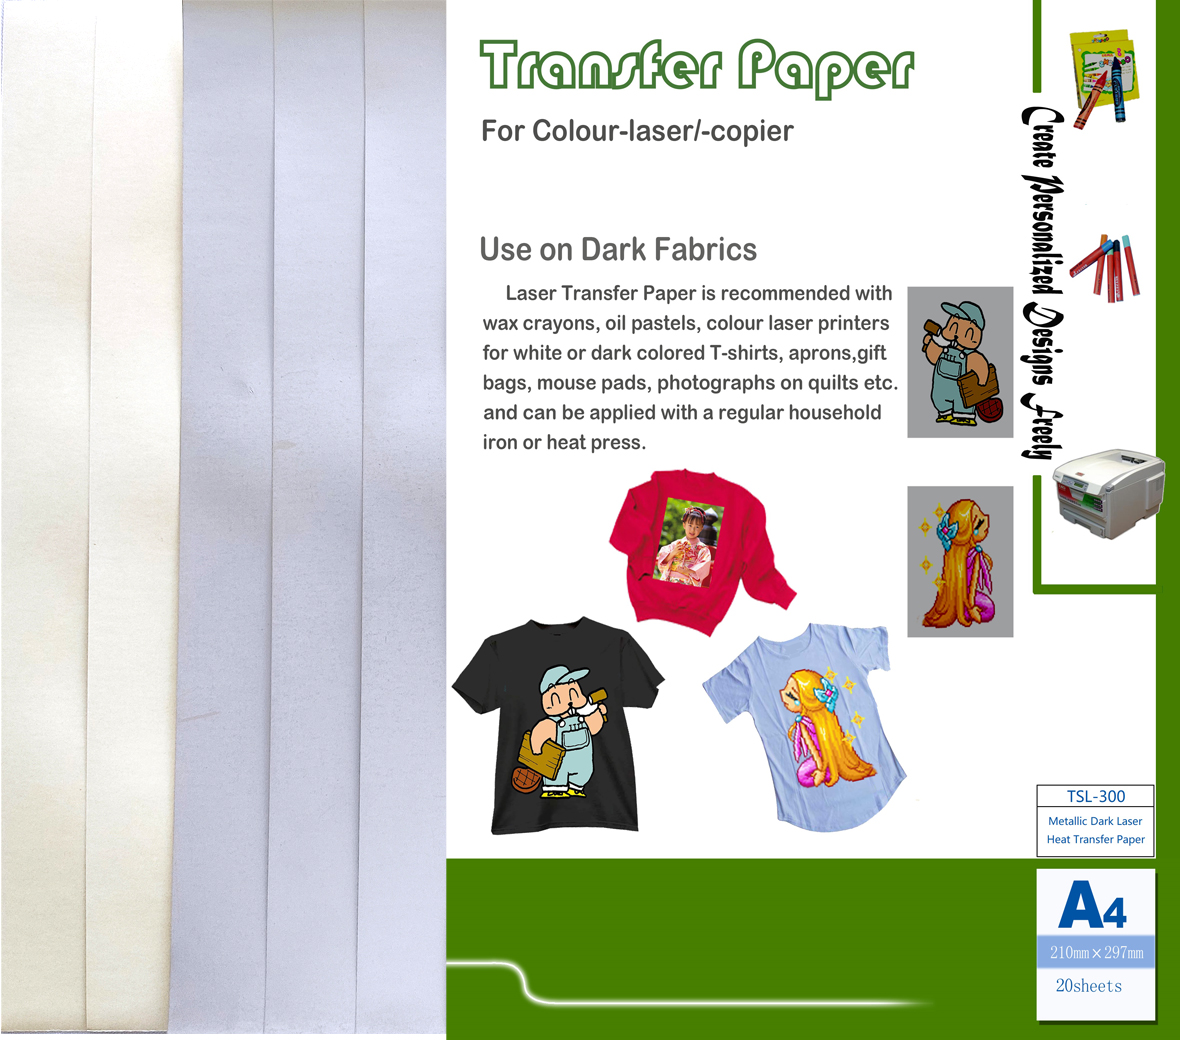 Metallic Color Laser Transfer Paper